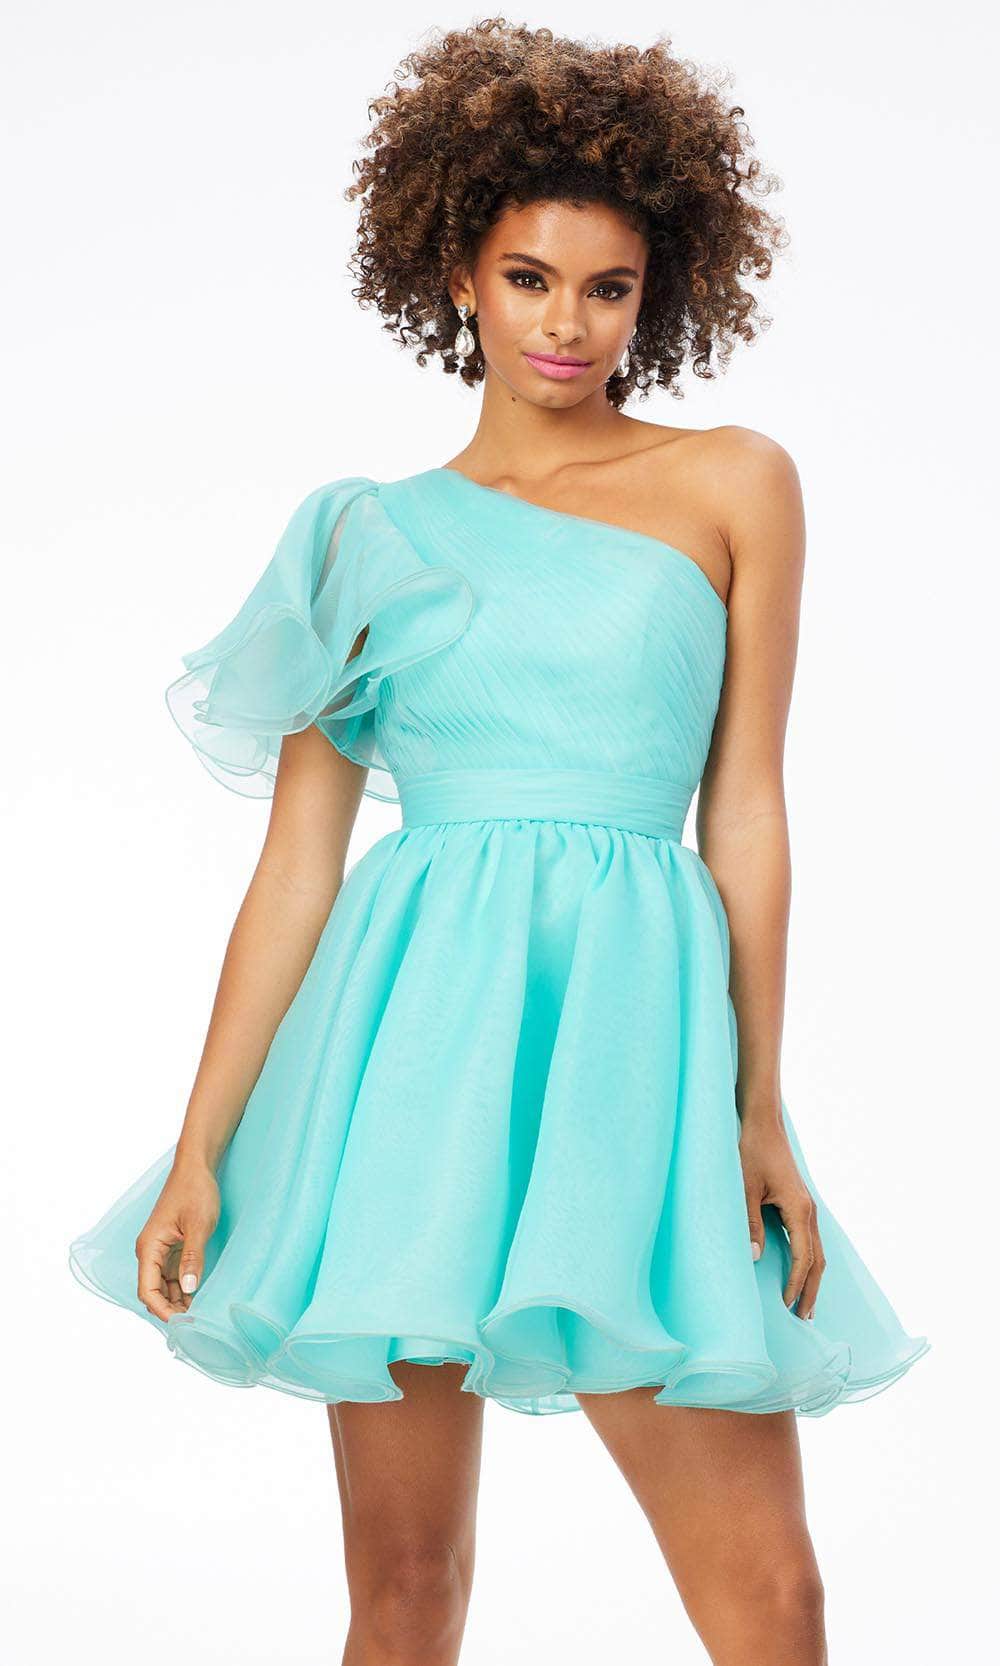 Ashley Lauren 4524 - Asymmetrical One Flutter Sleeve Cocktail Dress In Blue